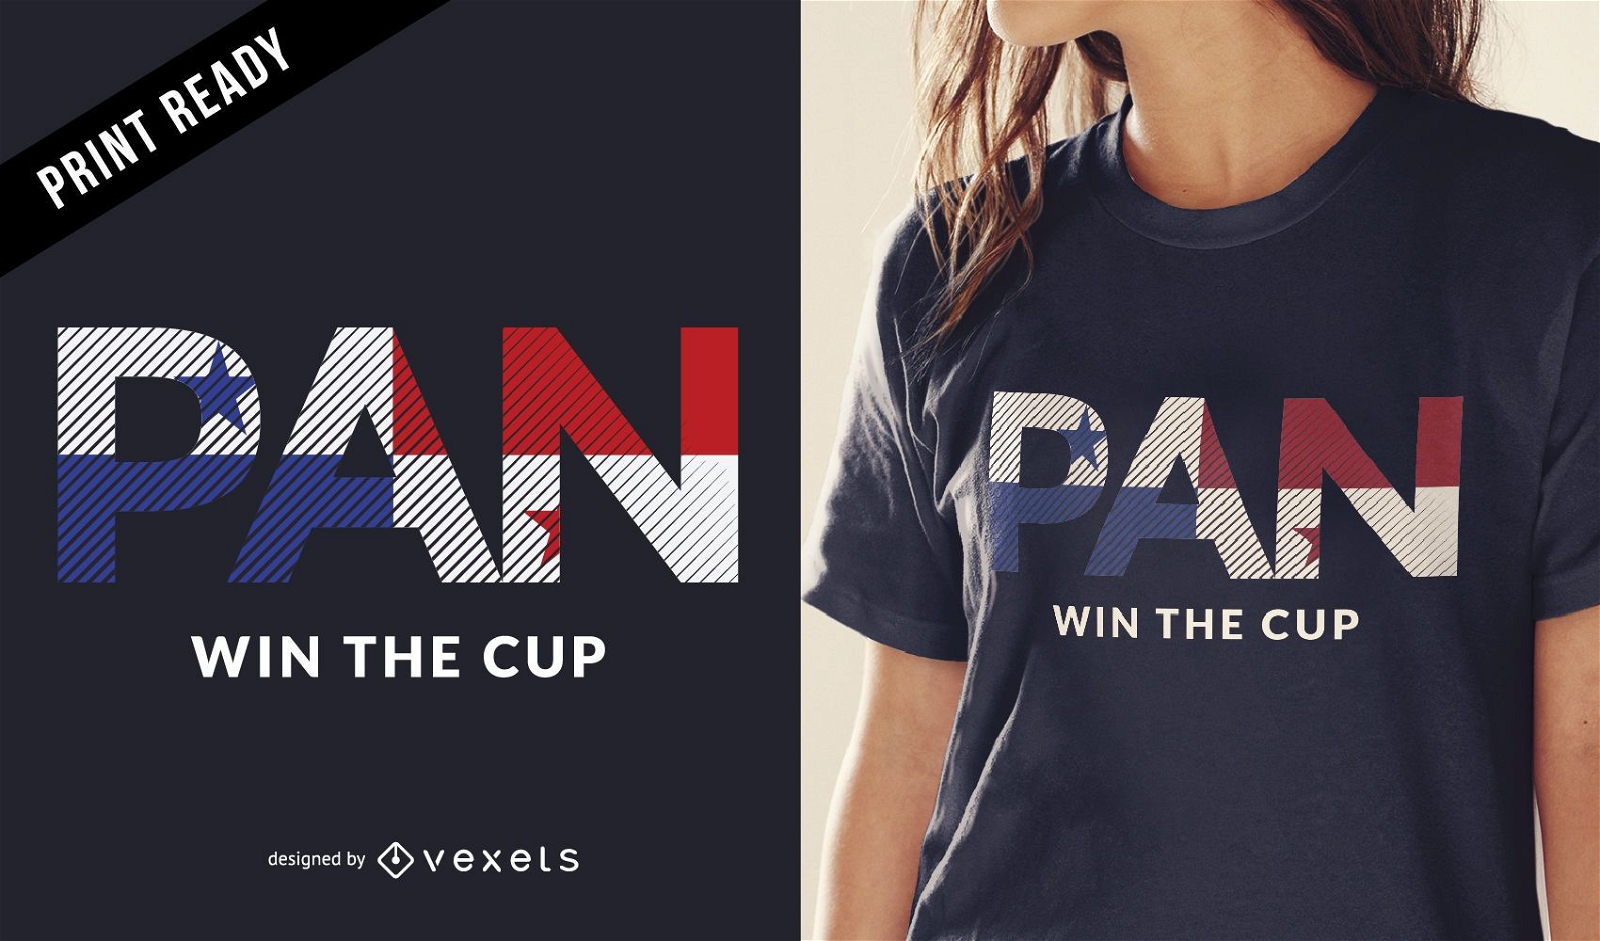 Panama world cup t-shirt design